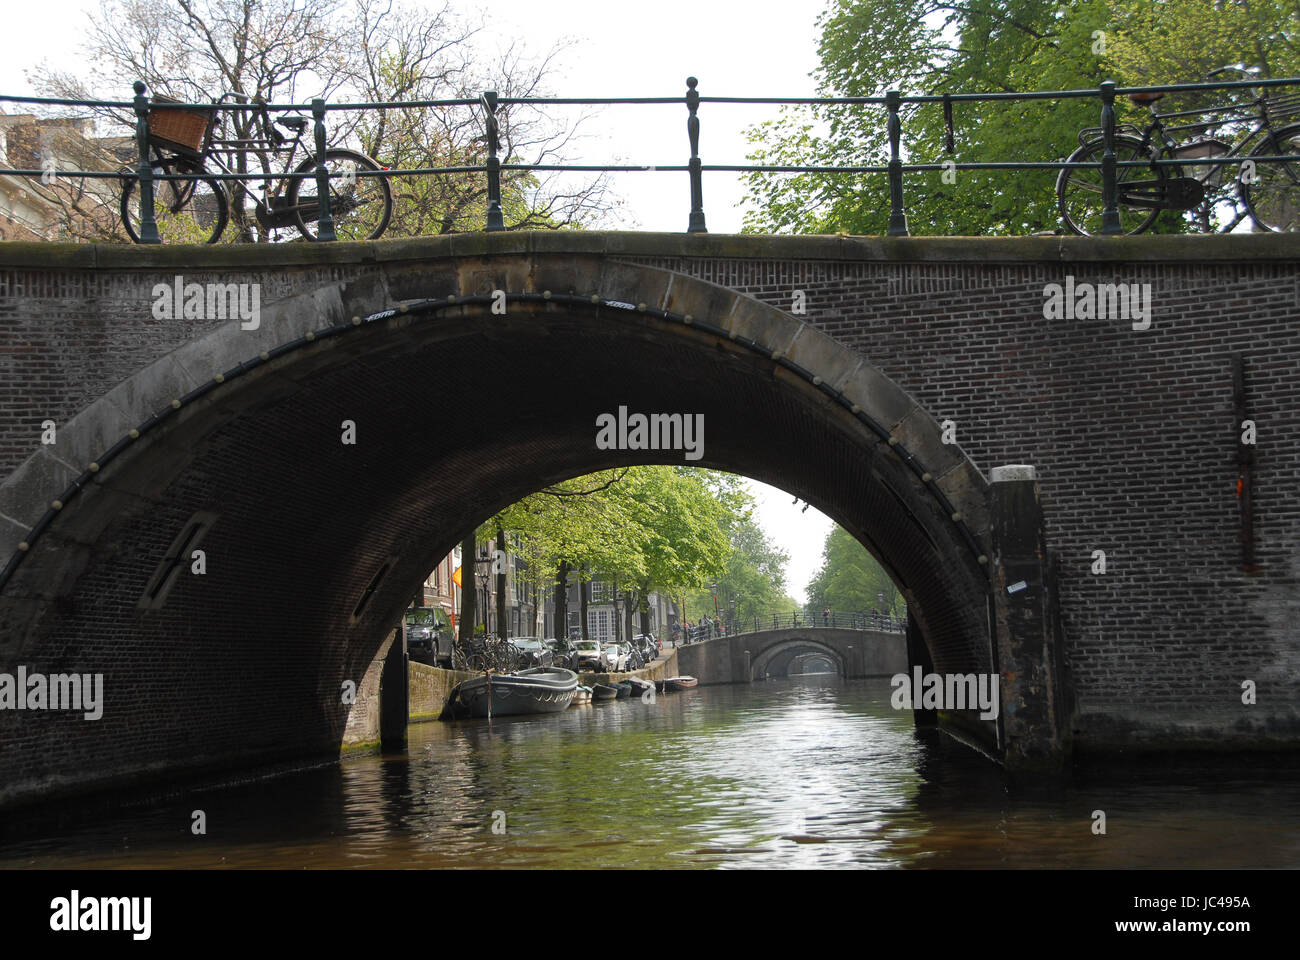 amsterdam canal Stock Photo